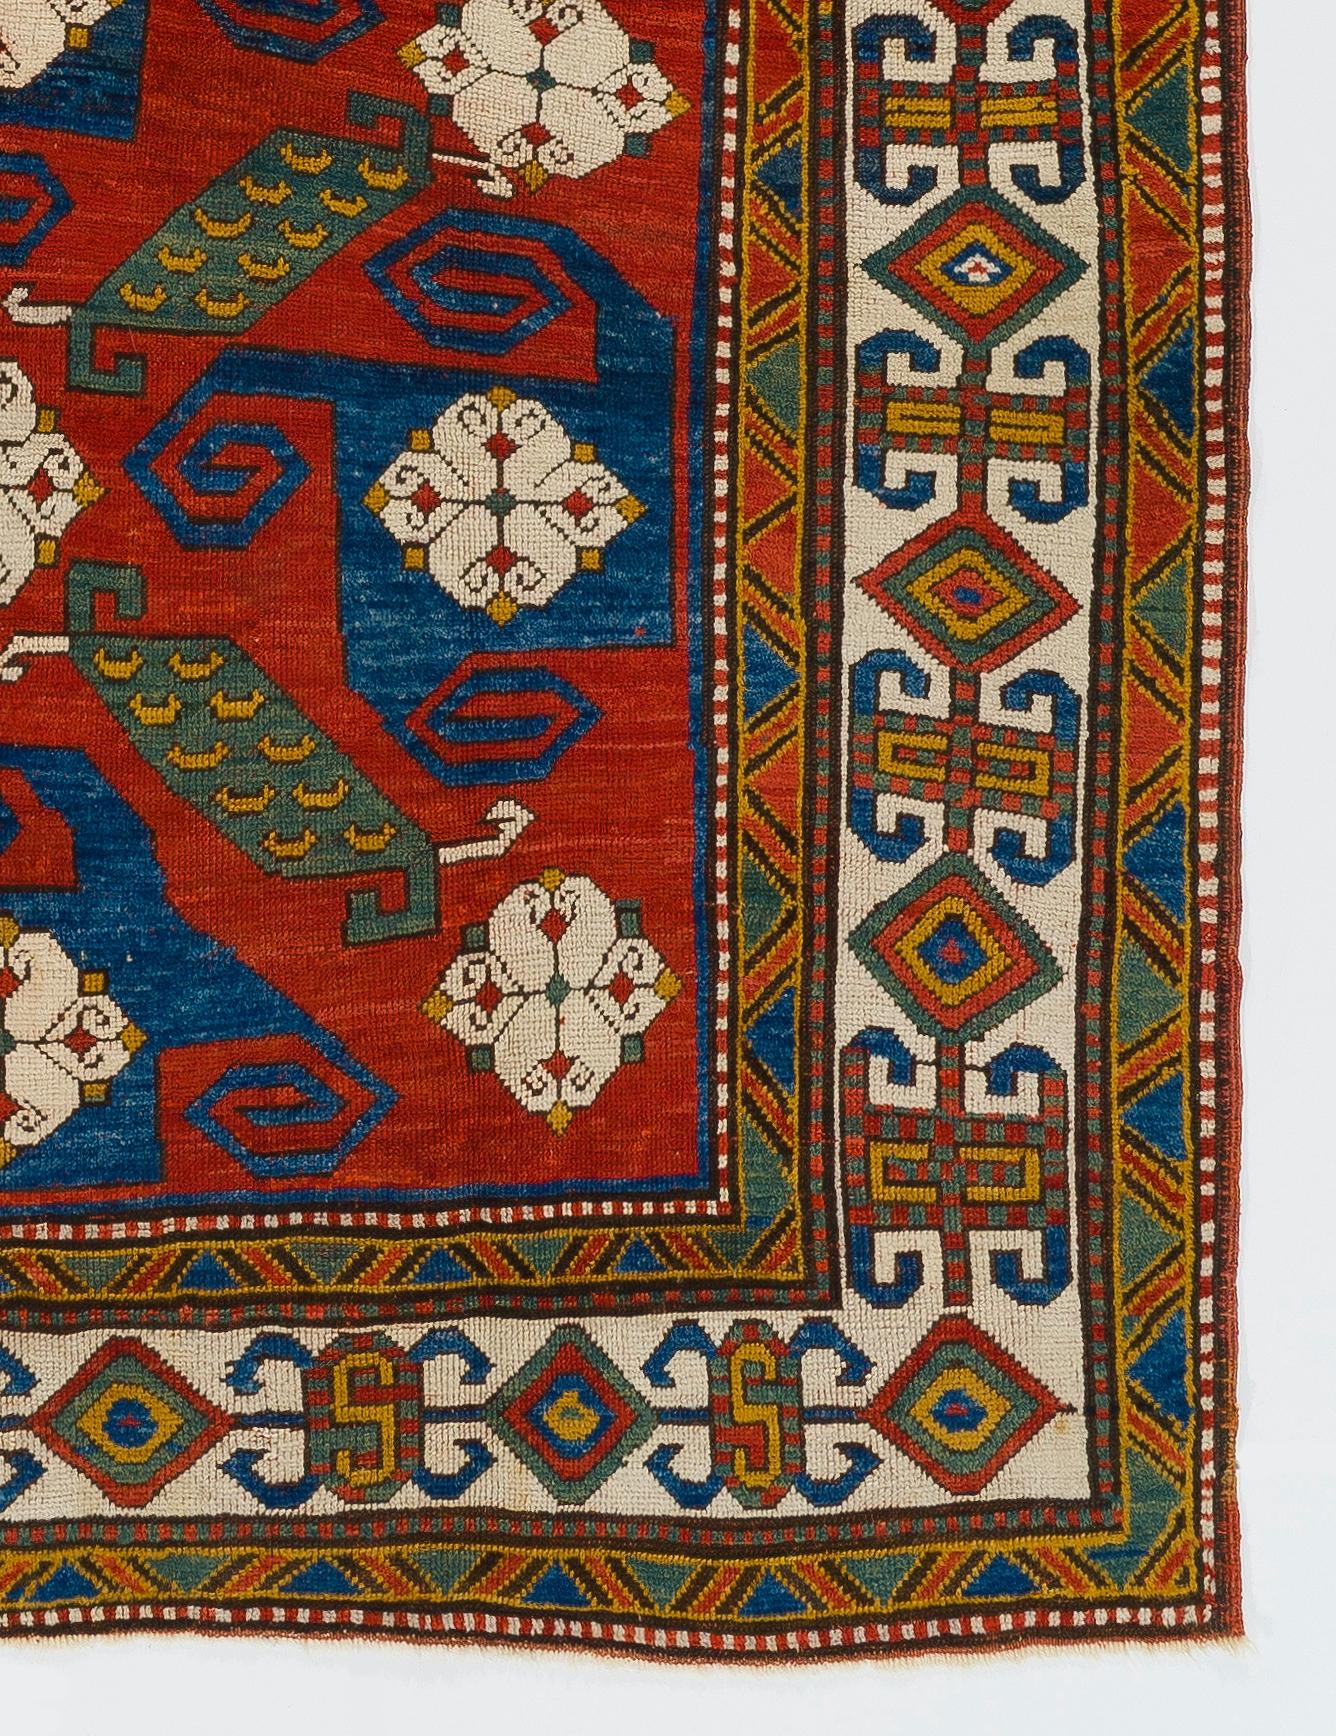 Wool Antique Caucasian Pinwheel Kazak Rug. Top Shelf Collectors Carpet. 5'6